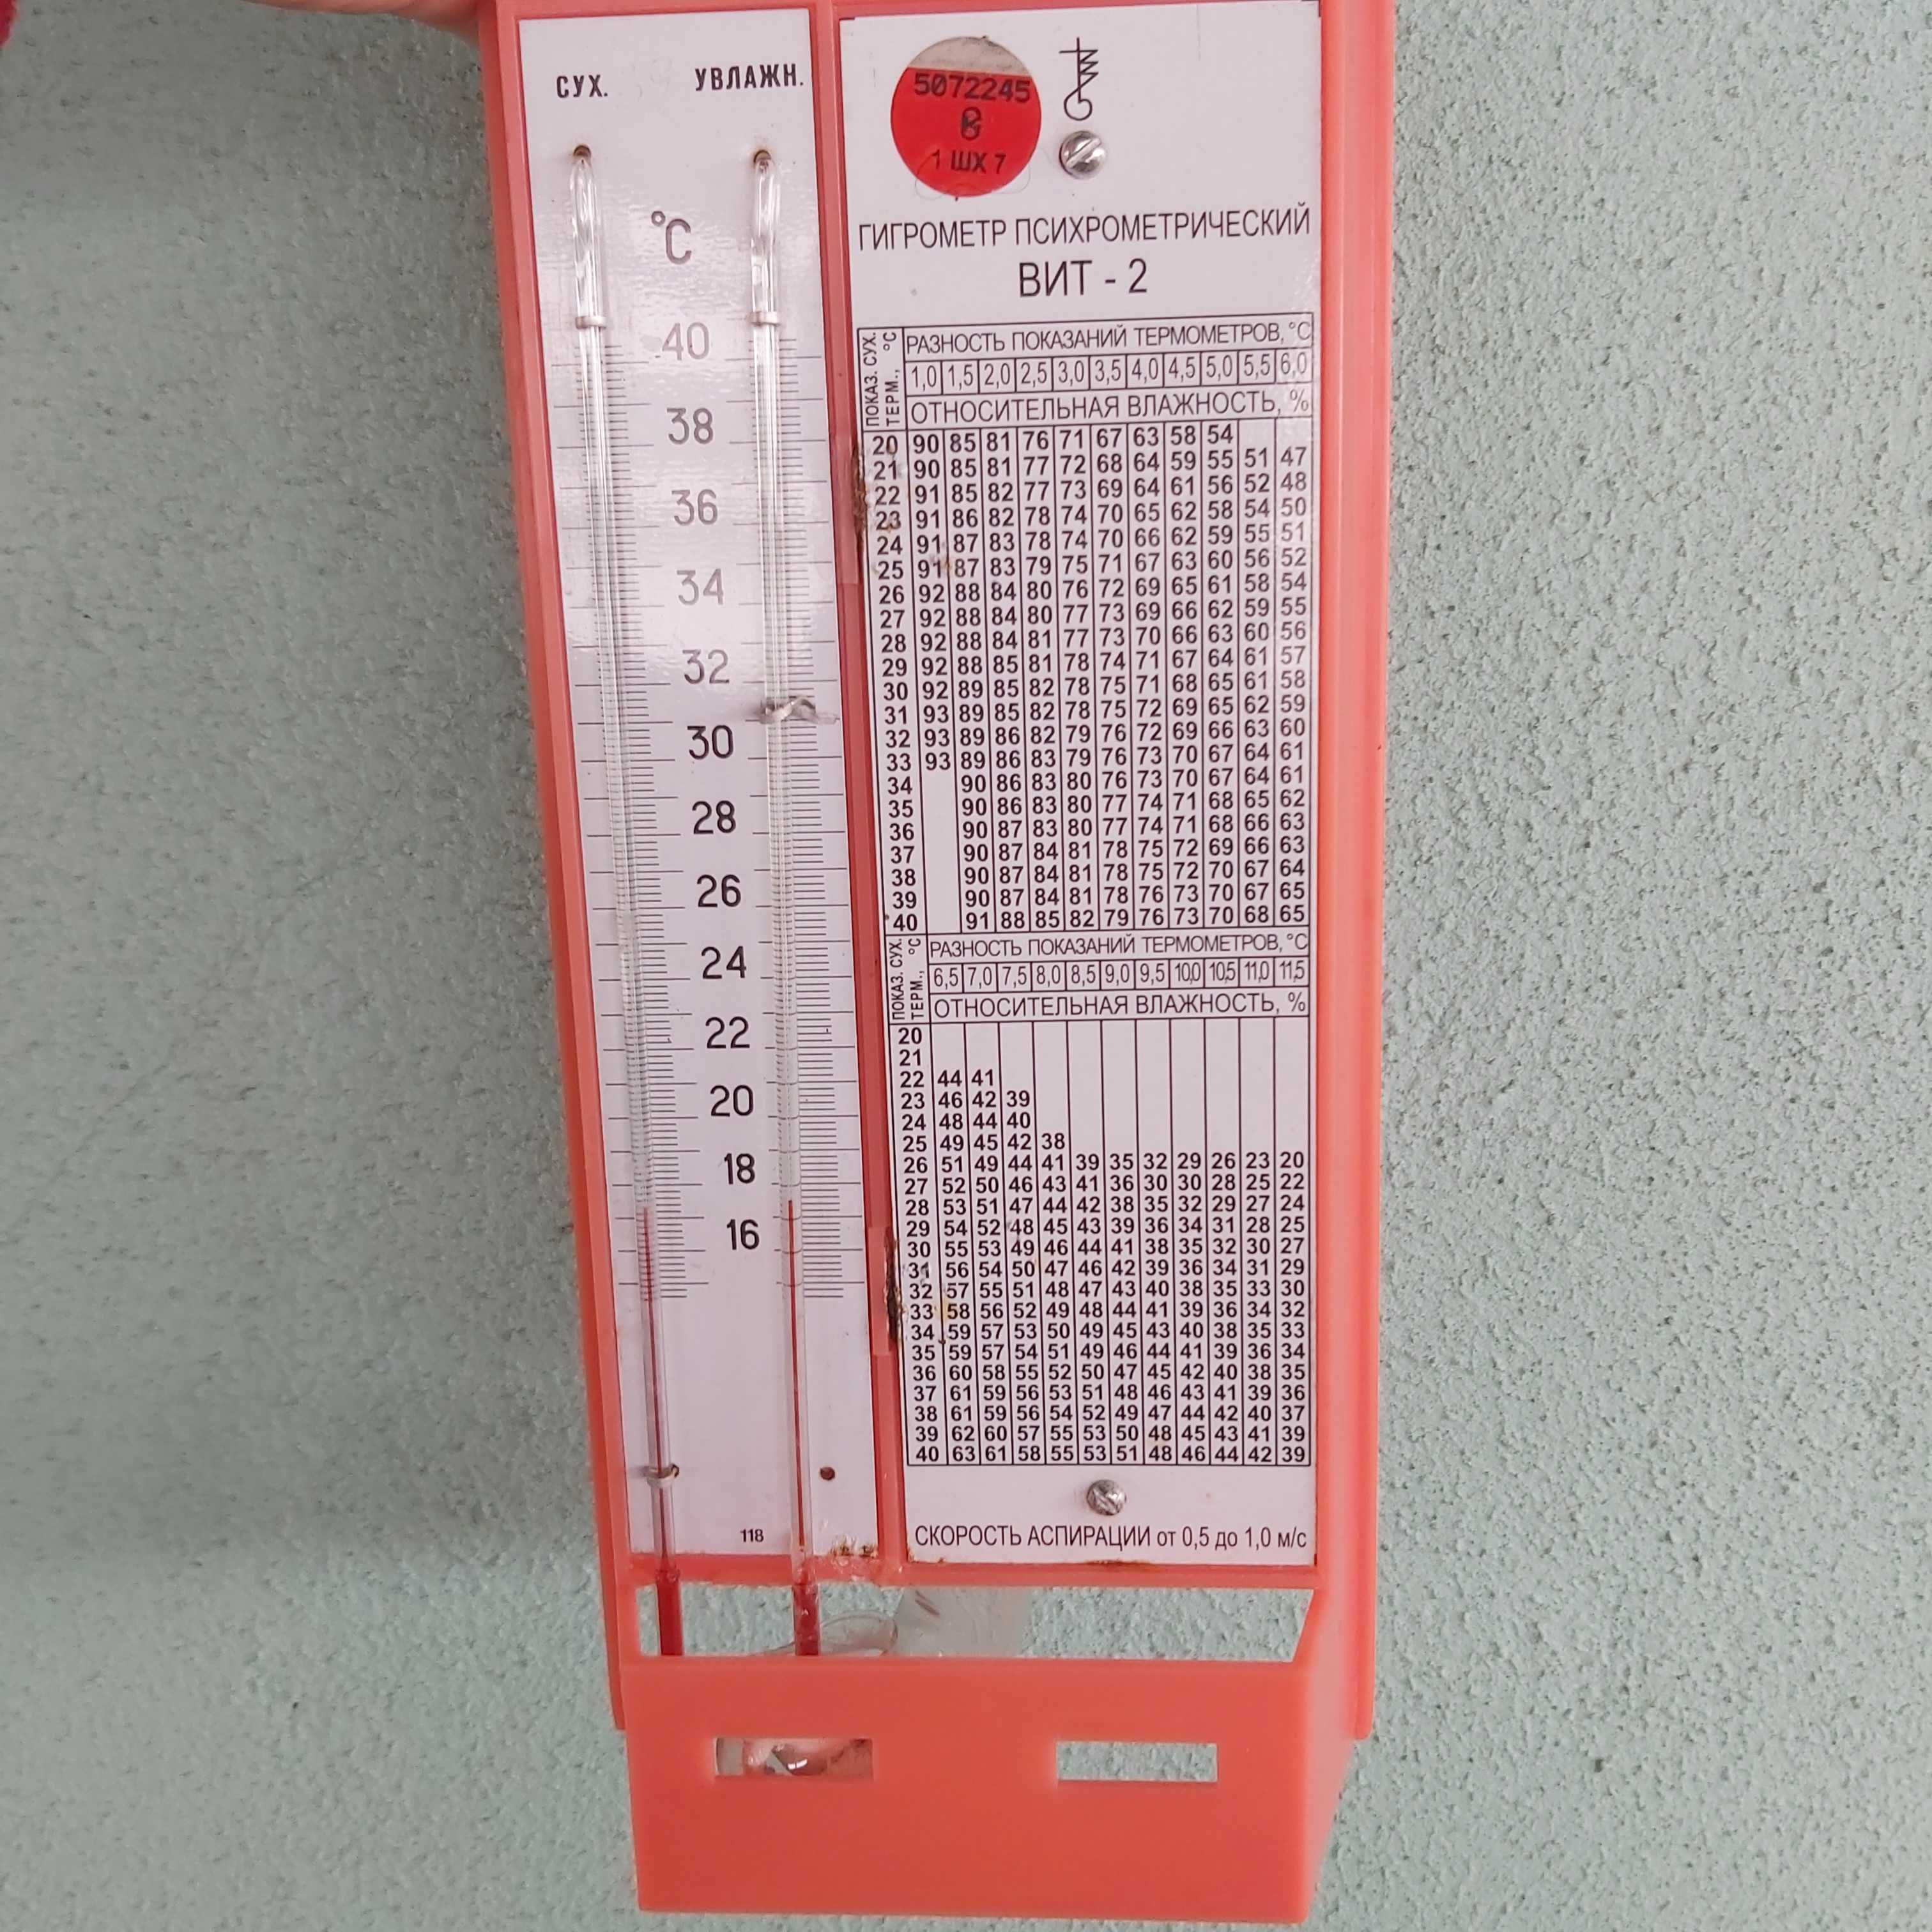 Термометр стеклоприбор, гигрометр психрометрический Вит-2